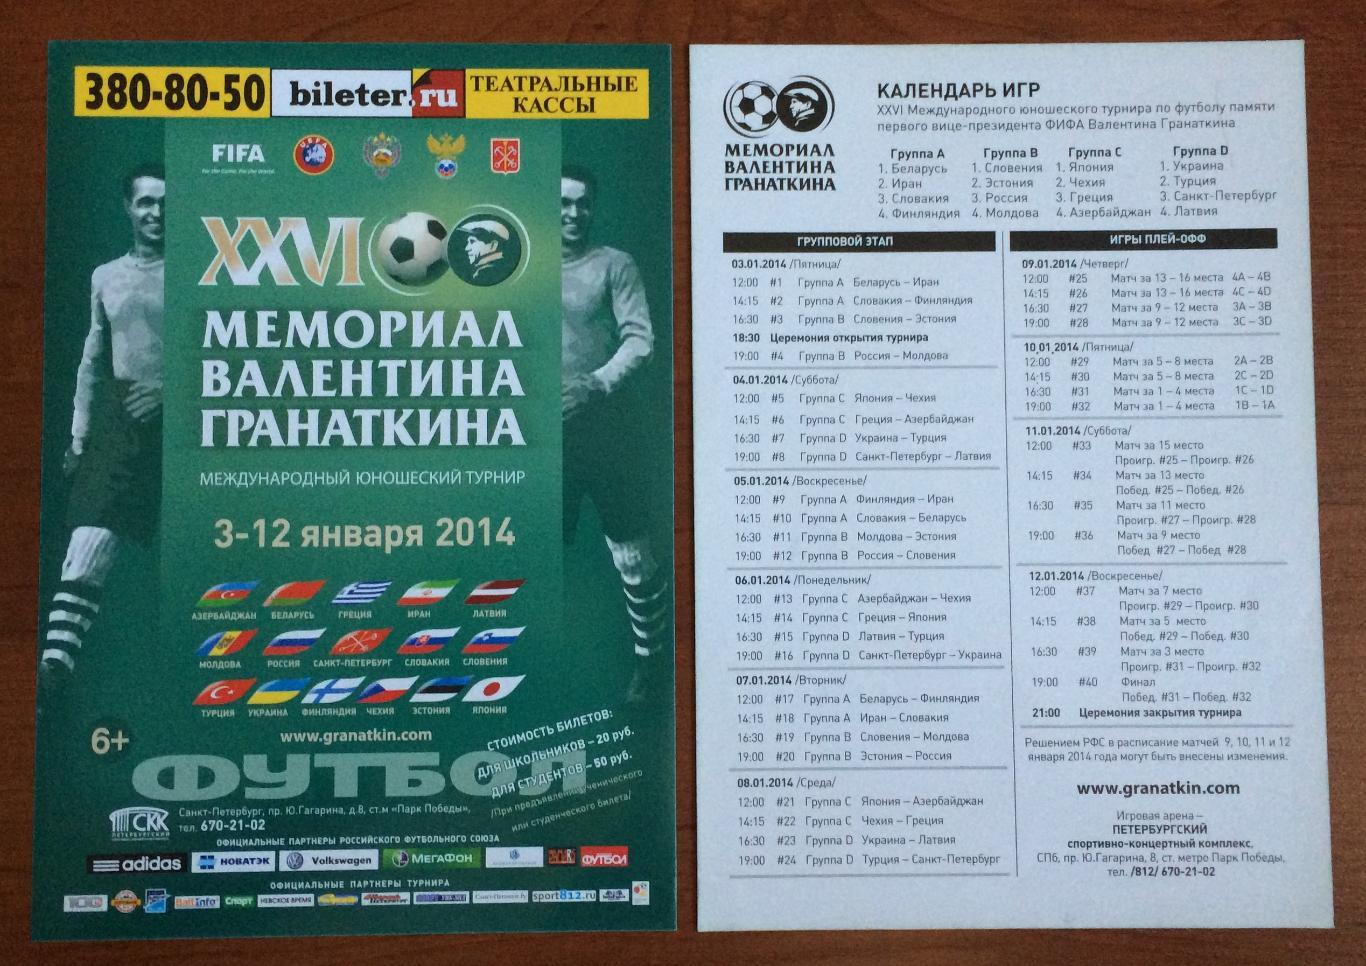 XXVI Мемориал Валентина Гранаткина 3-12 января 2014 год календарь игр